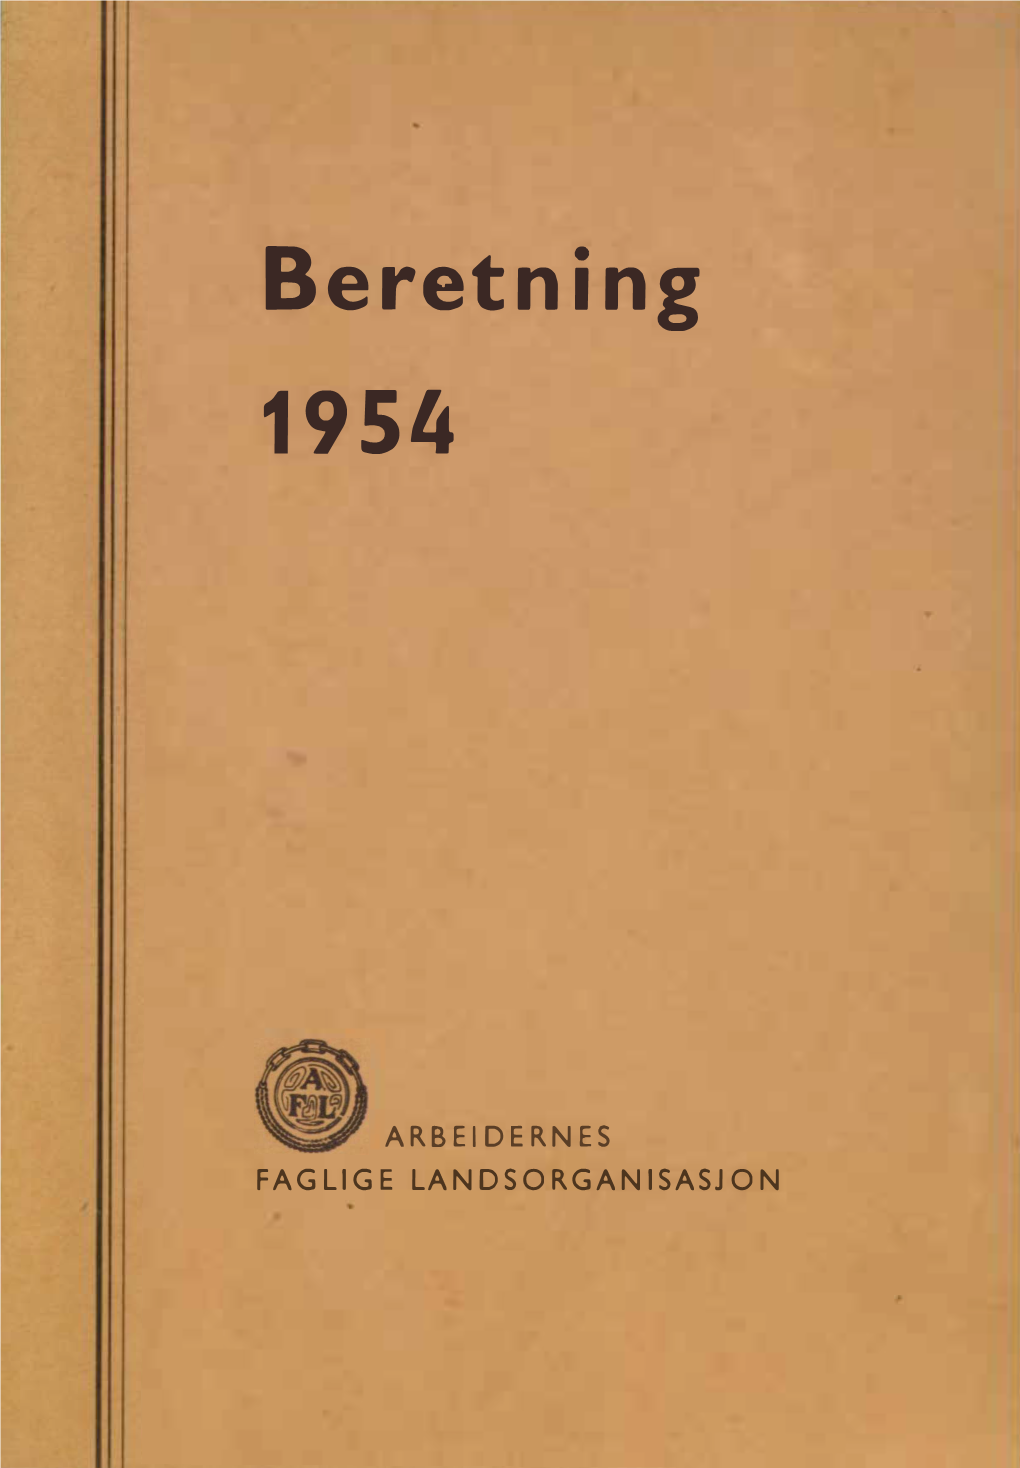 Beretning 1954